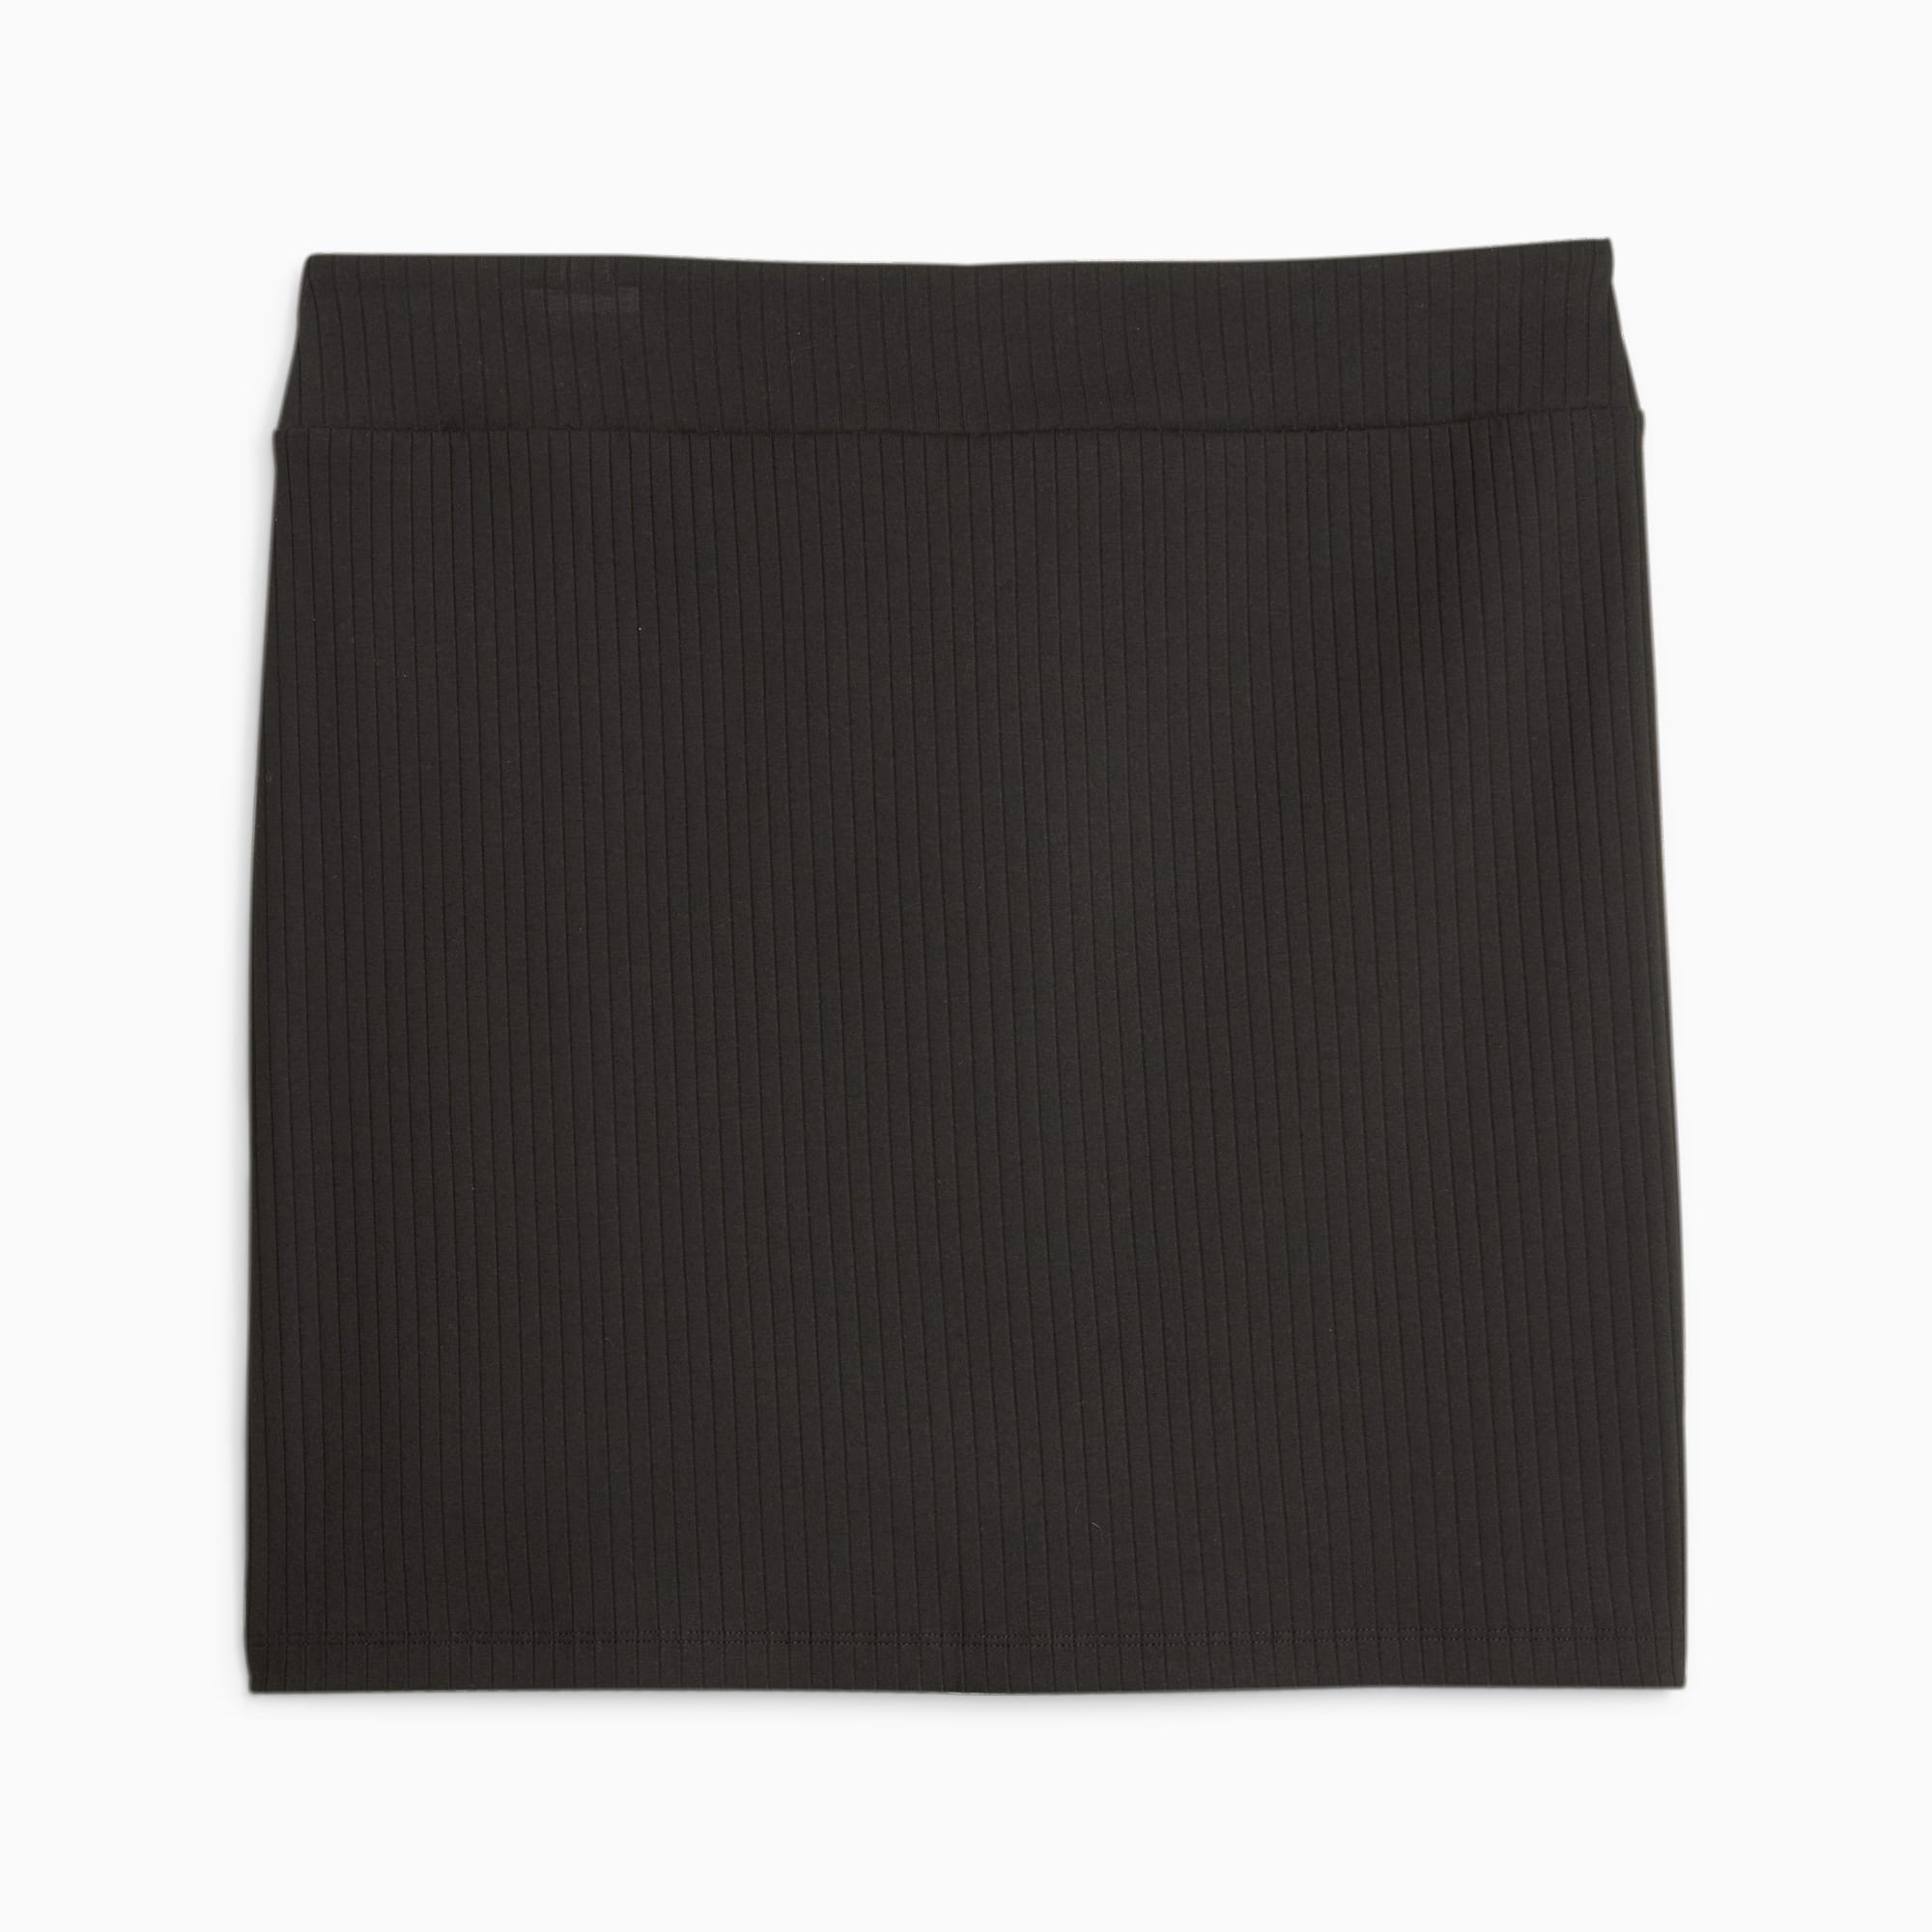 PUMA Classics Women's Ribbed Skirt, Black, Size M, Clothing